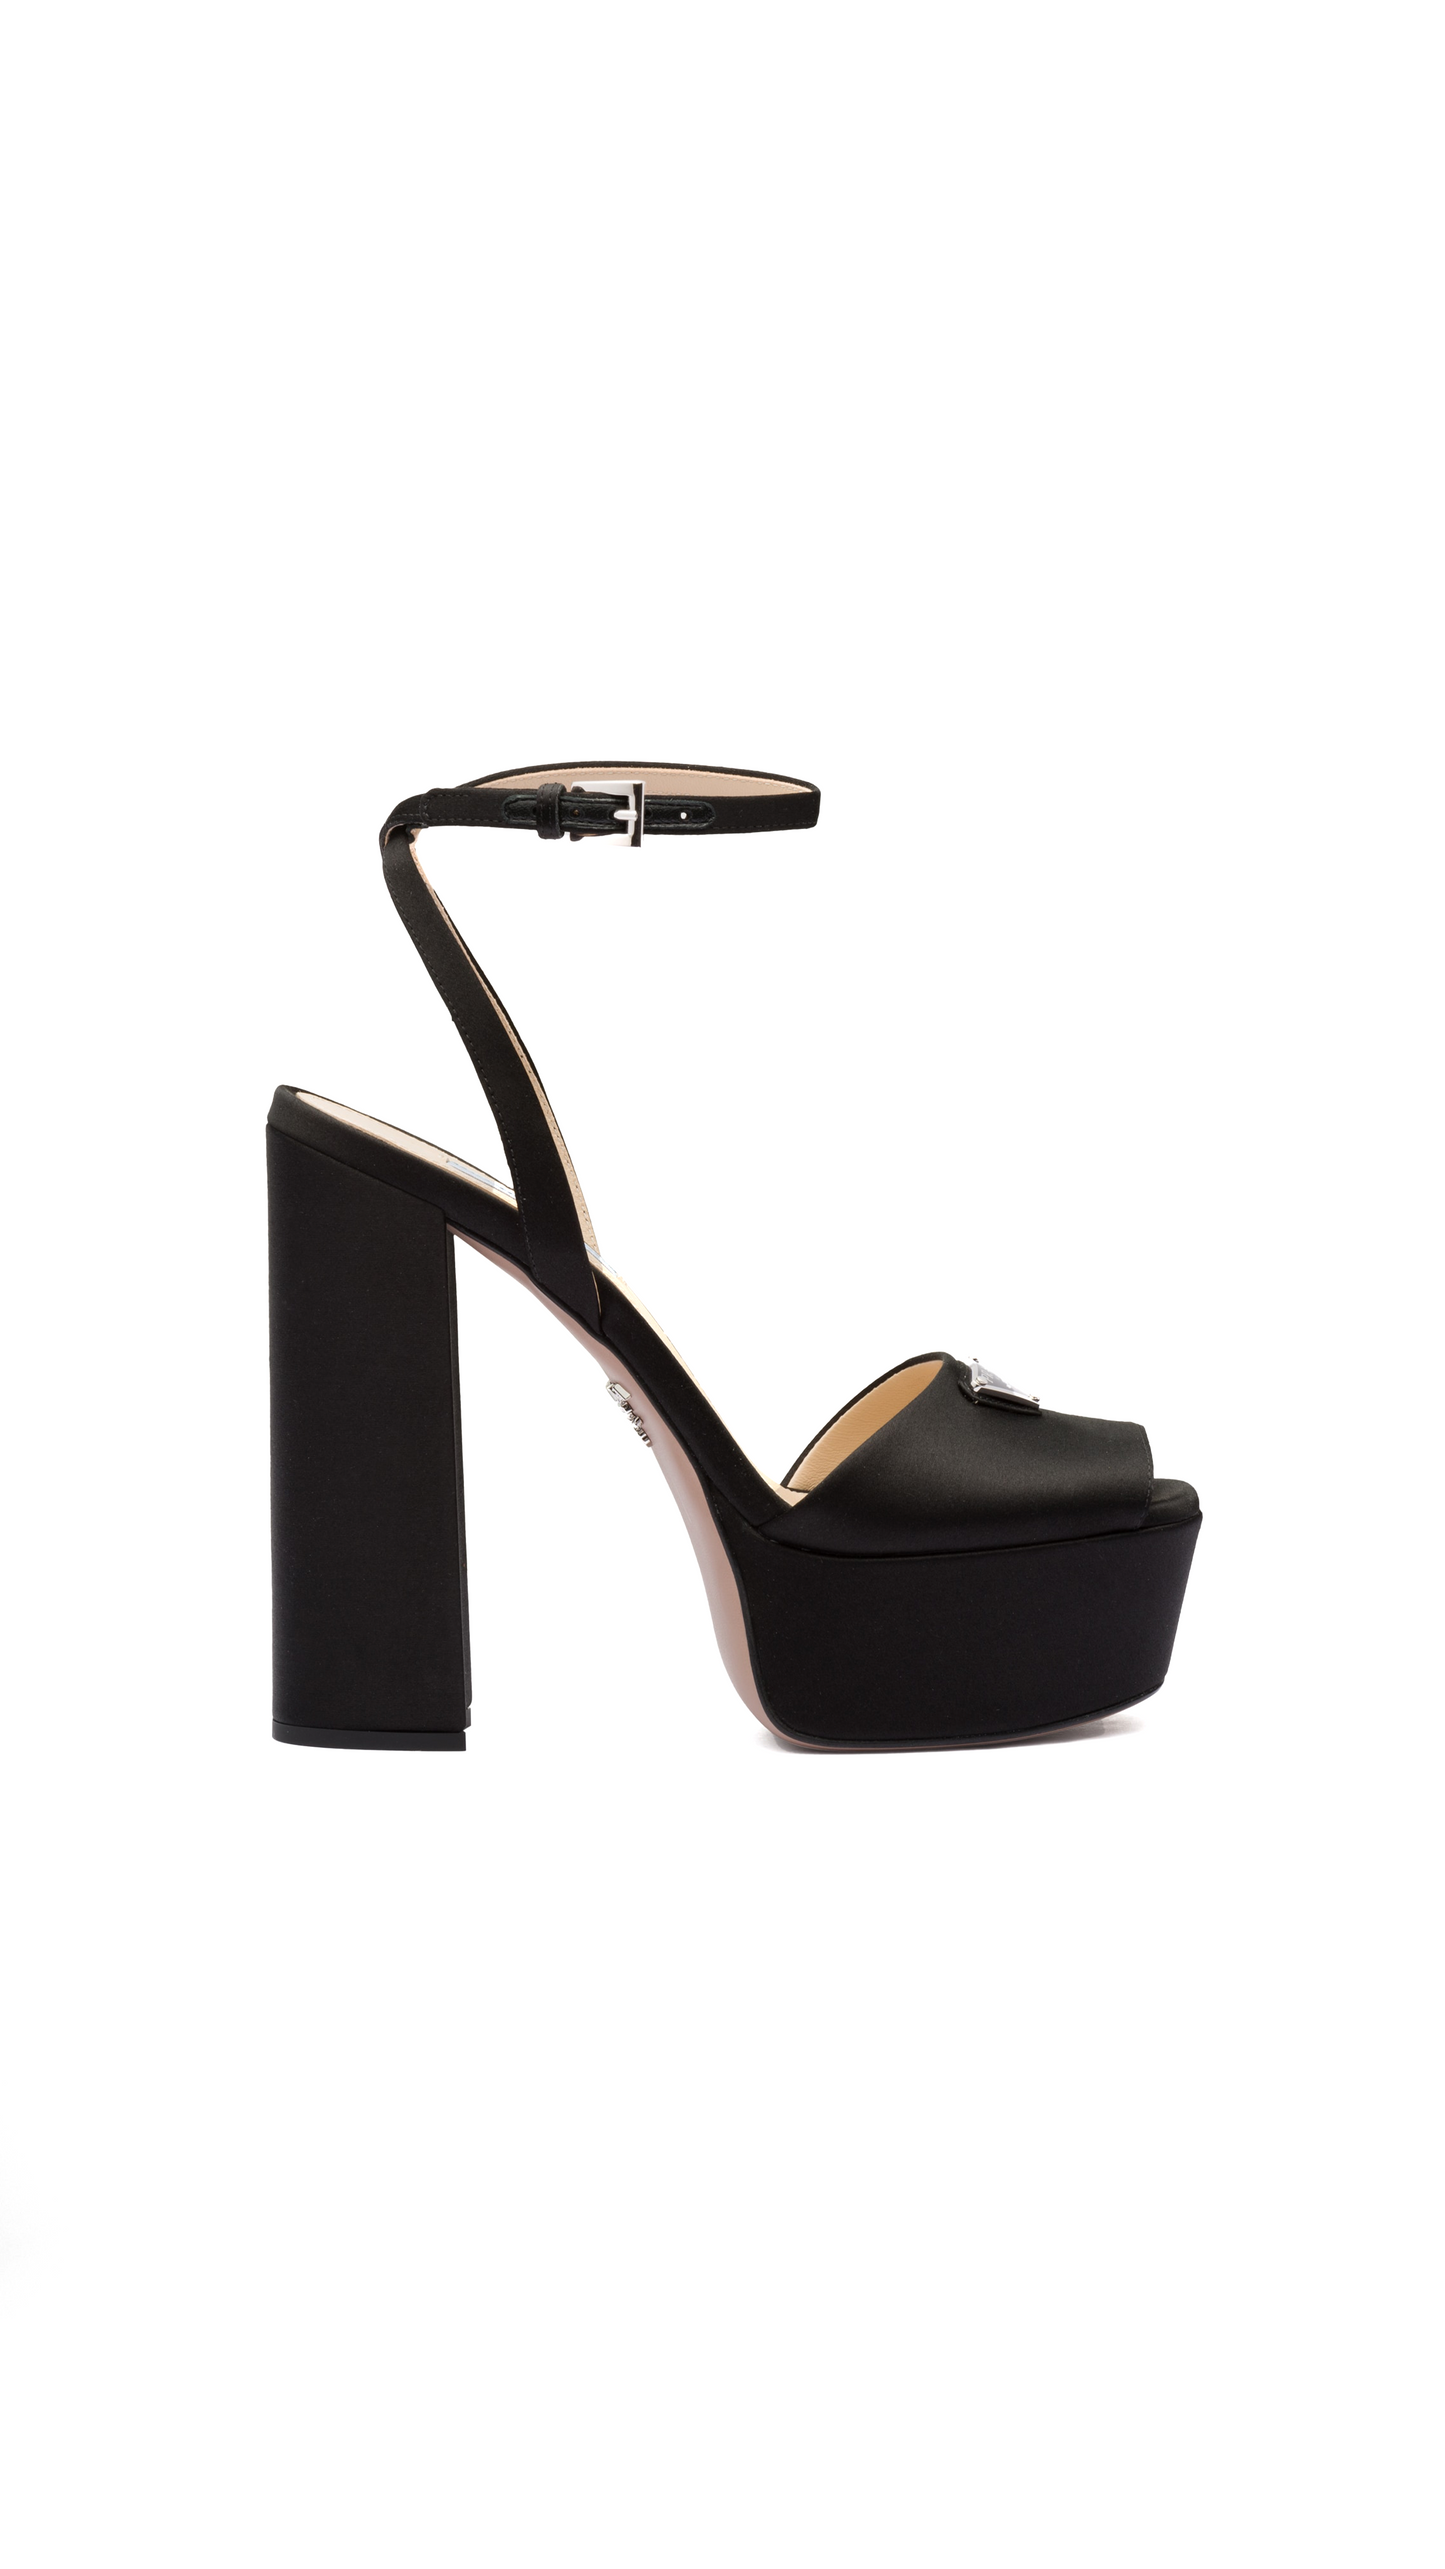 High-heeled Satin Sandals - Black